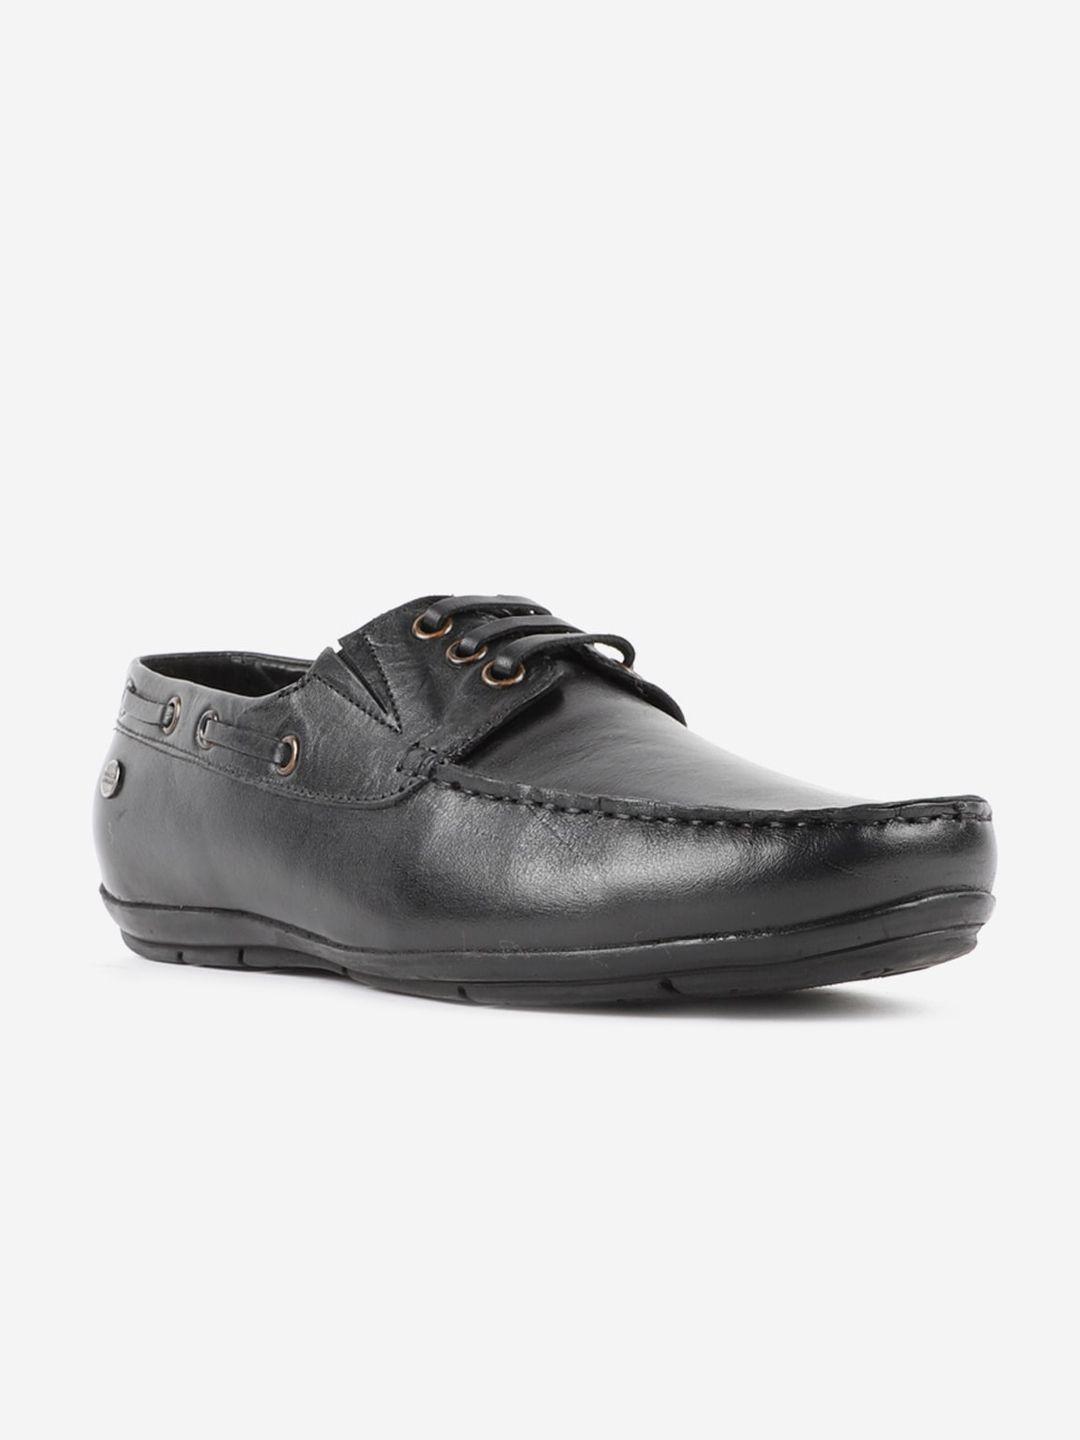 carlton london men black boat shoes